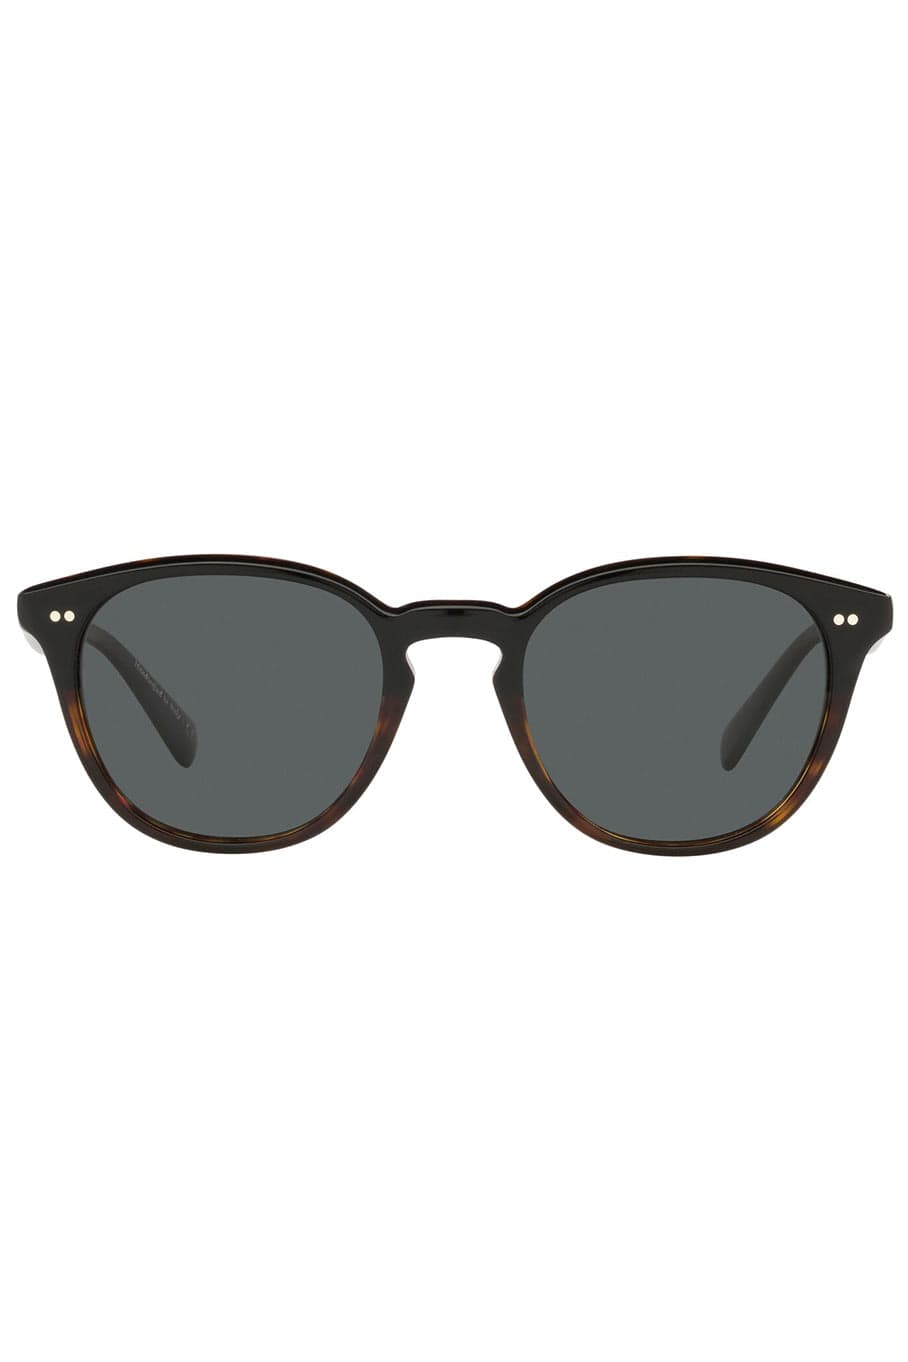 OLIVER PEOPLES-Desmon Sun Sunglasses - Black-BLACK POLAR